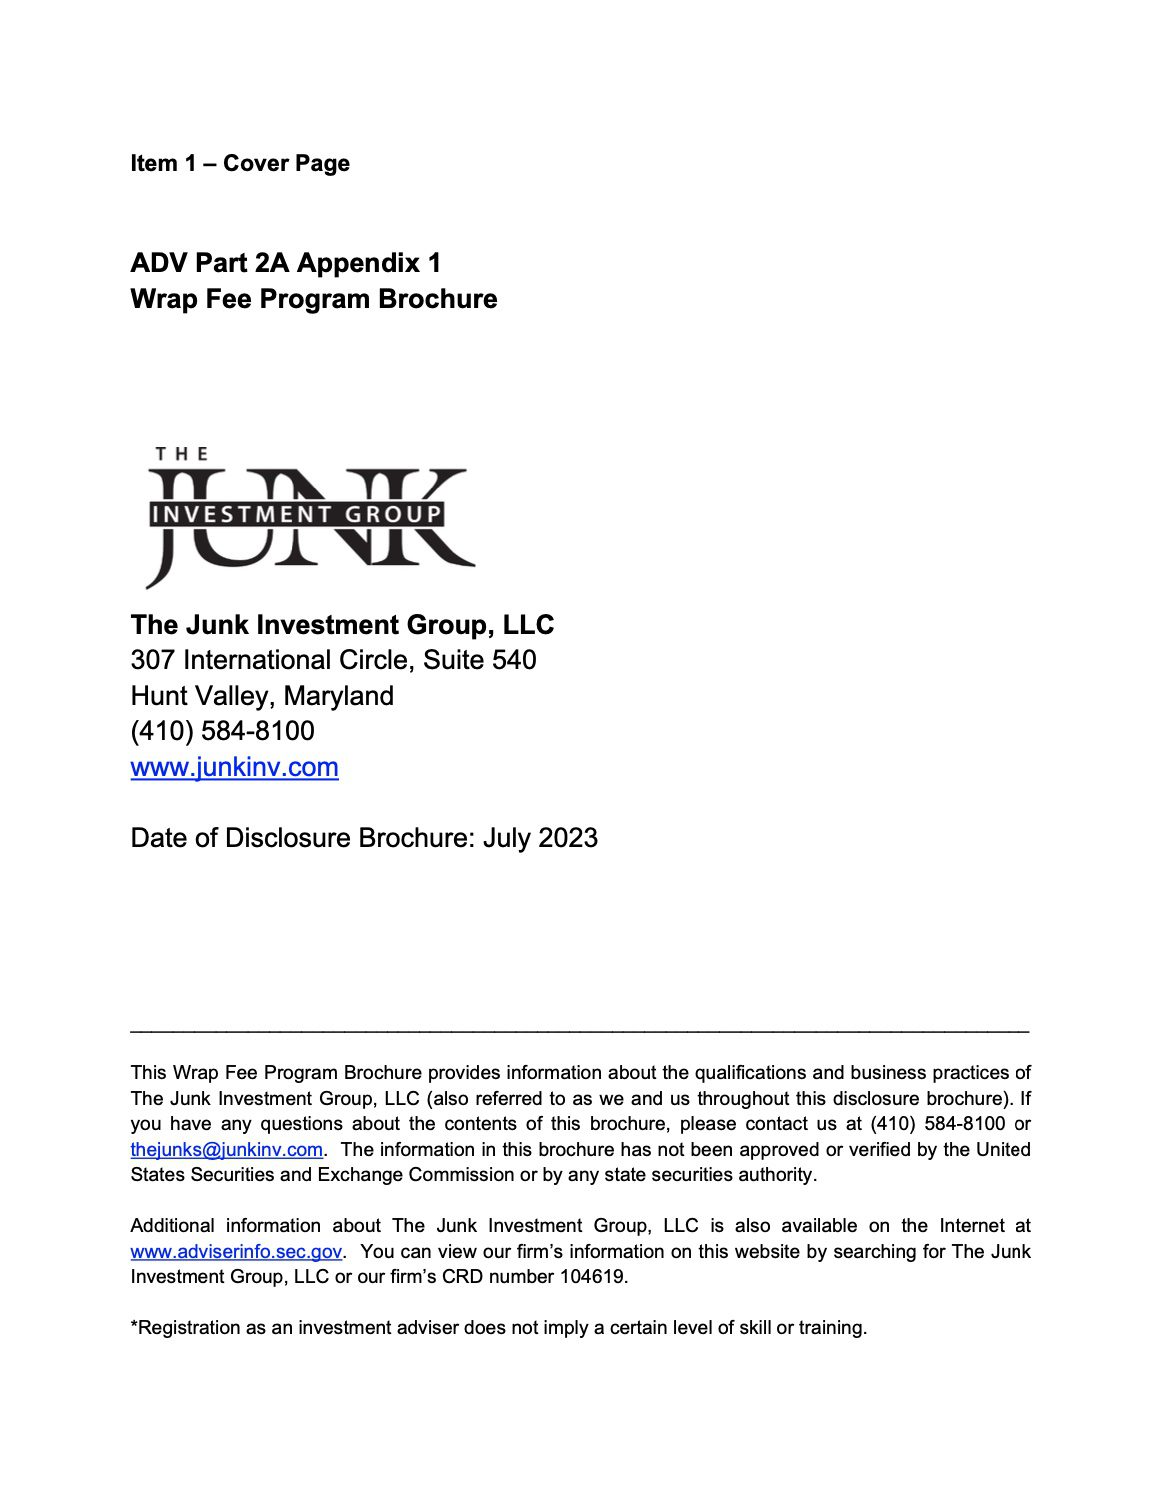 Junk Investment Disclosures